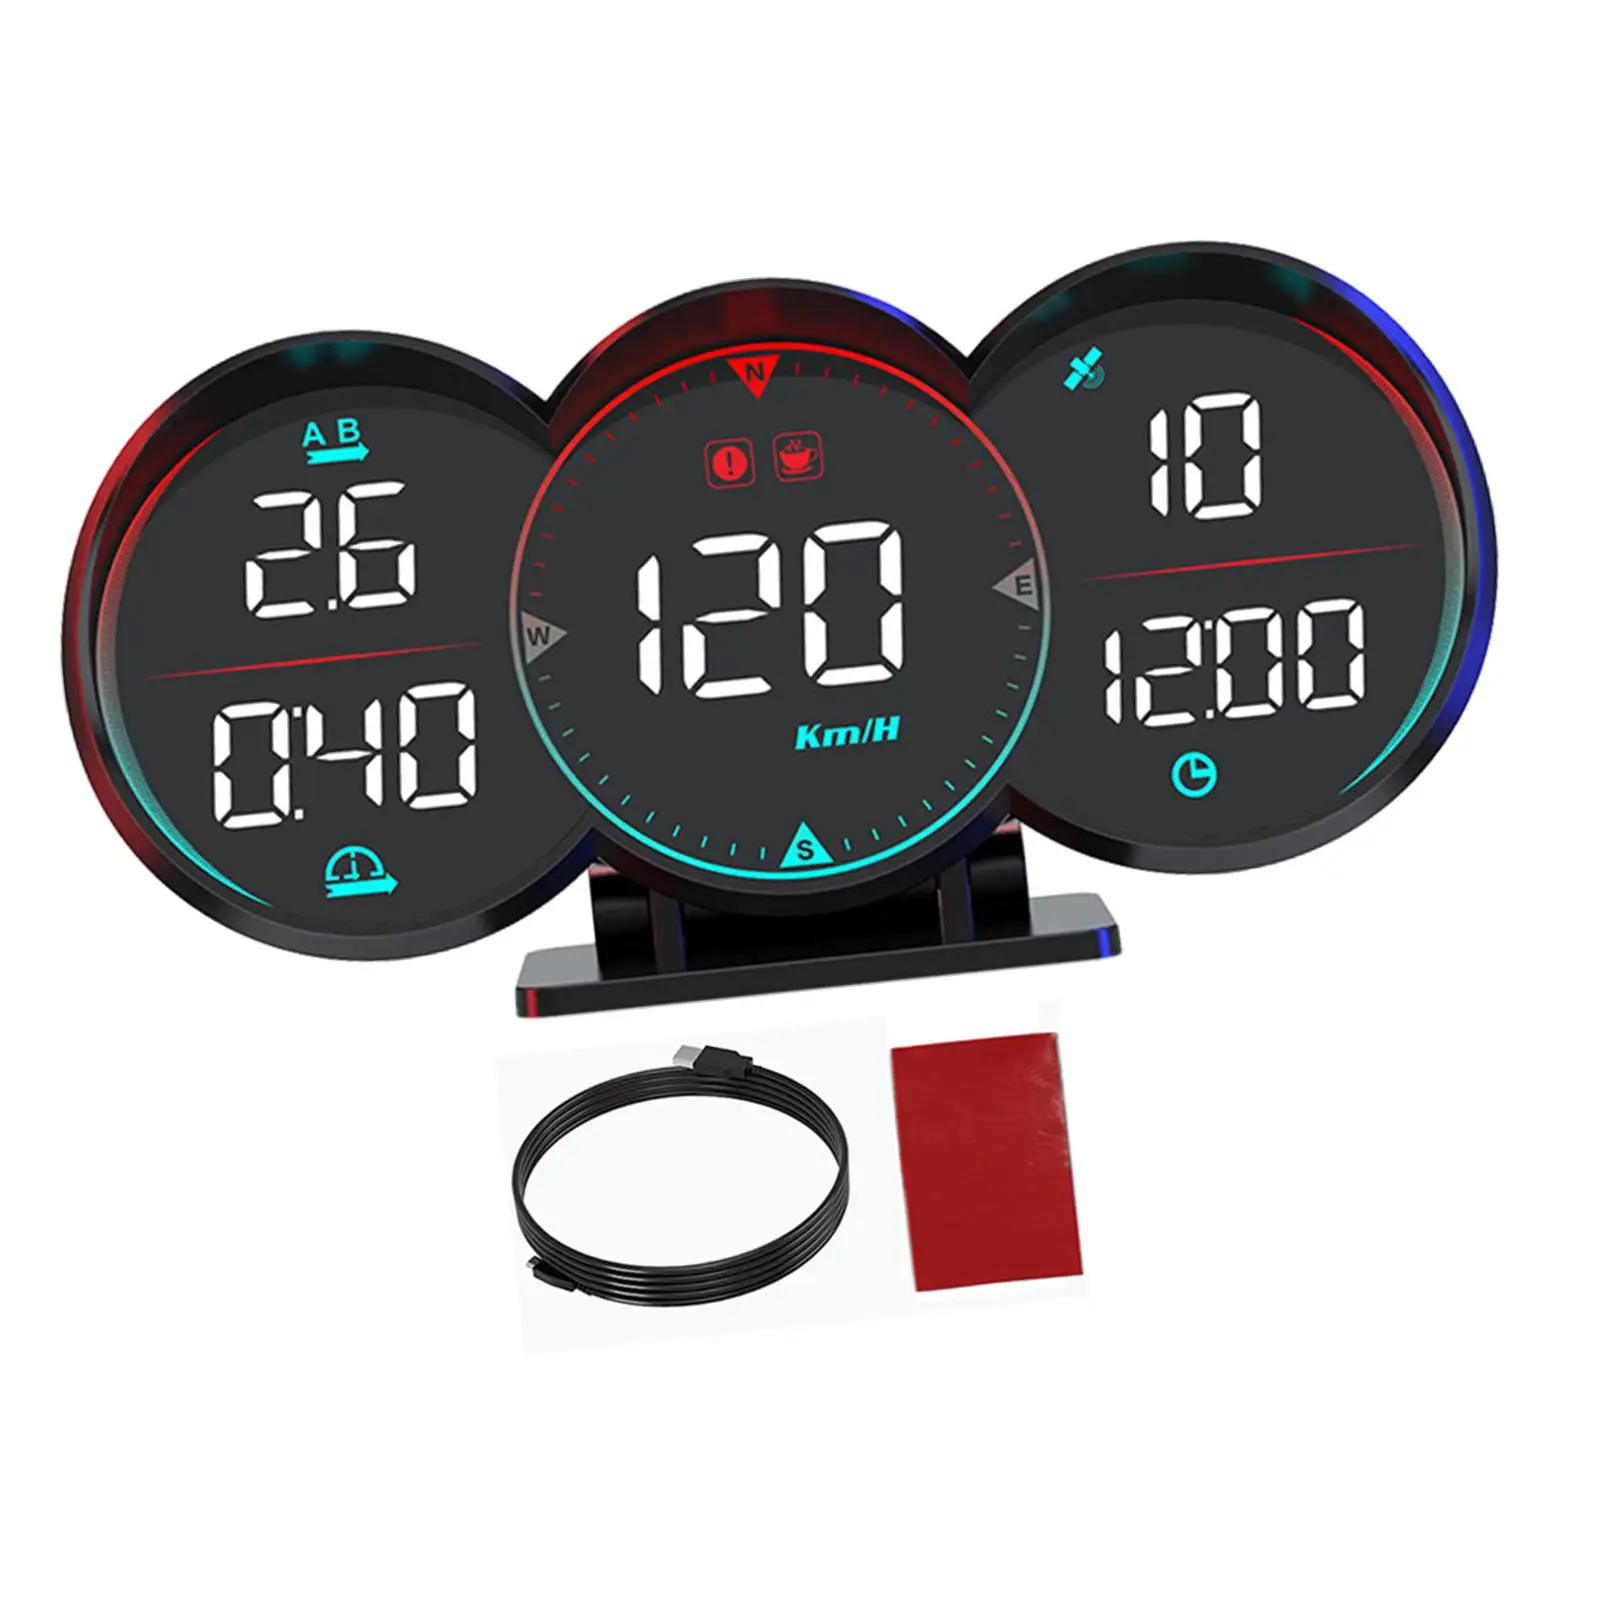 G17 GPS HUD Auto Speedometer Head up Display, Car HUD Head up Display for